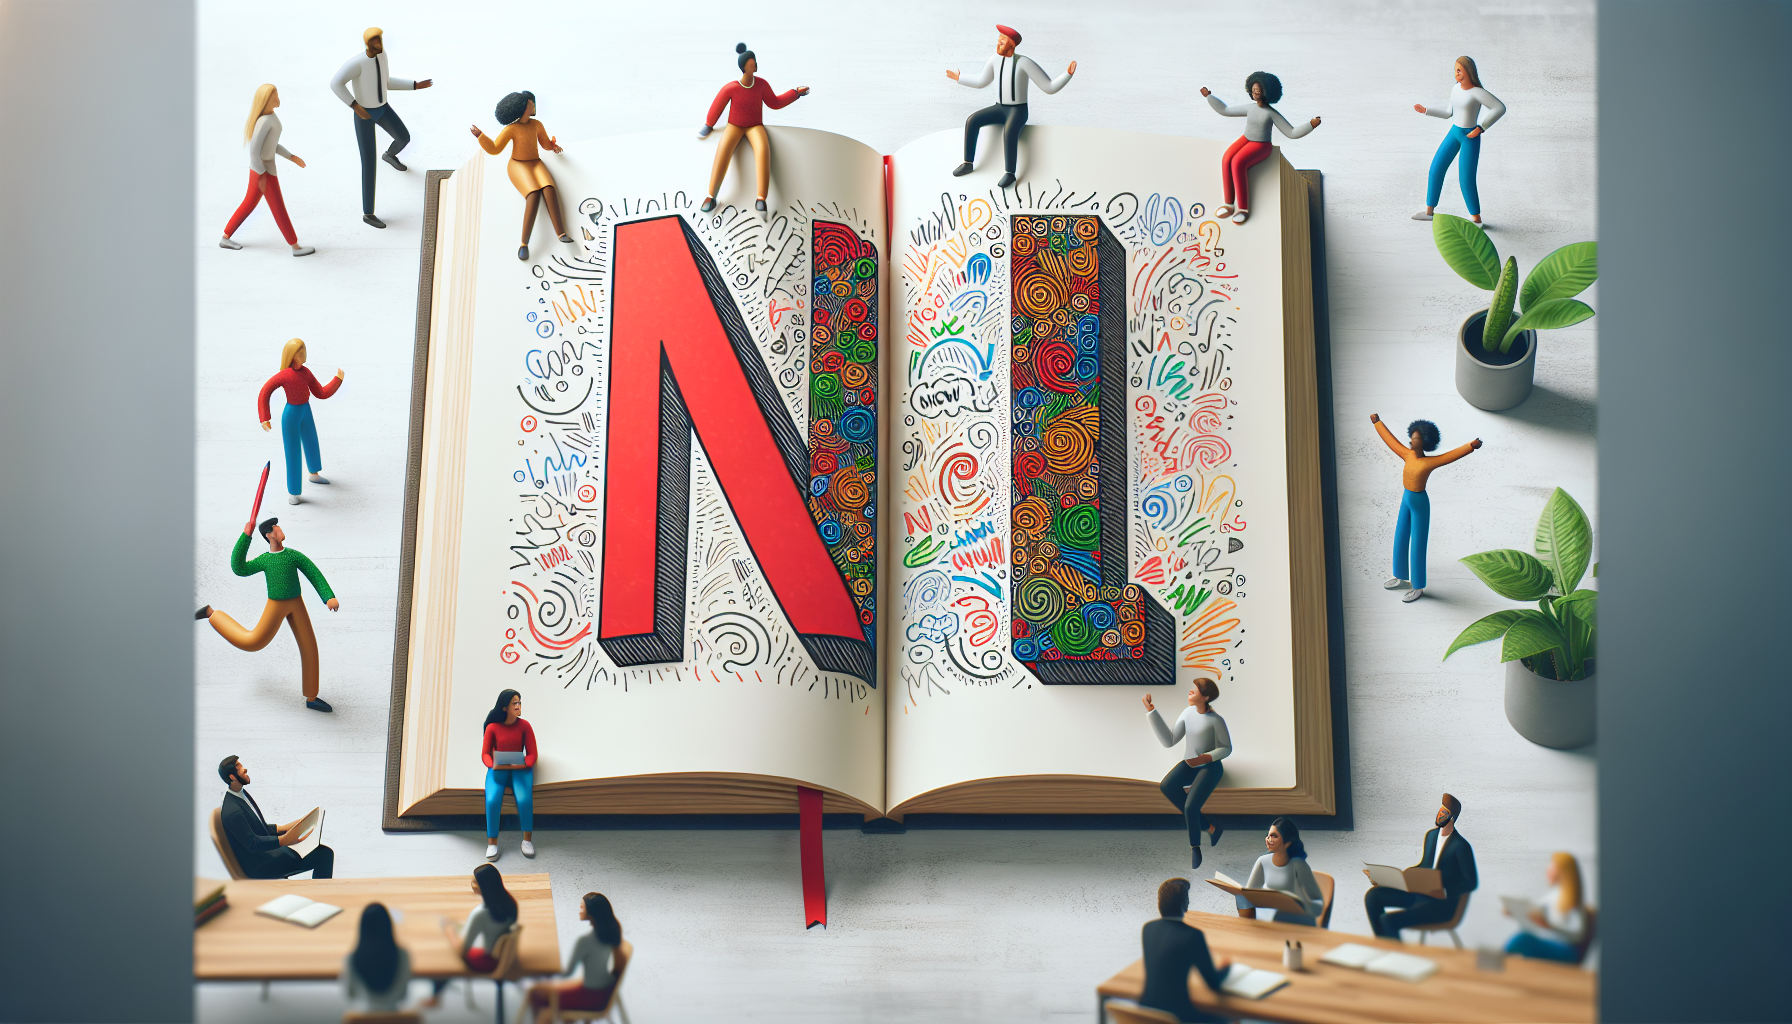 Engaging Design of Netflix's Handbook